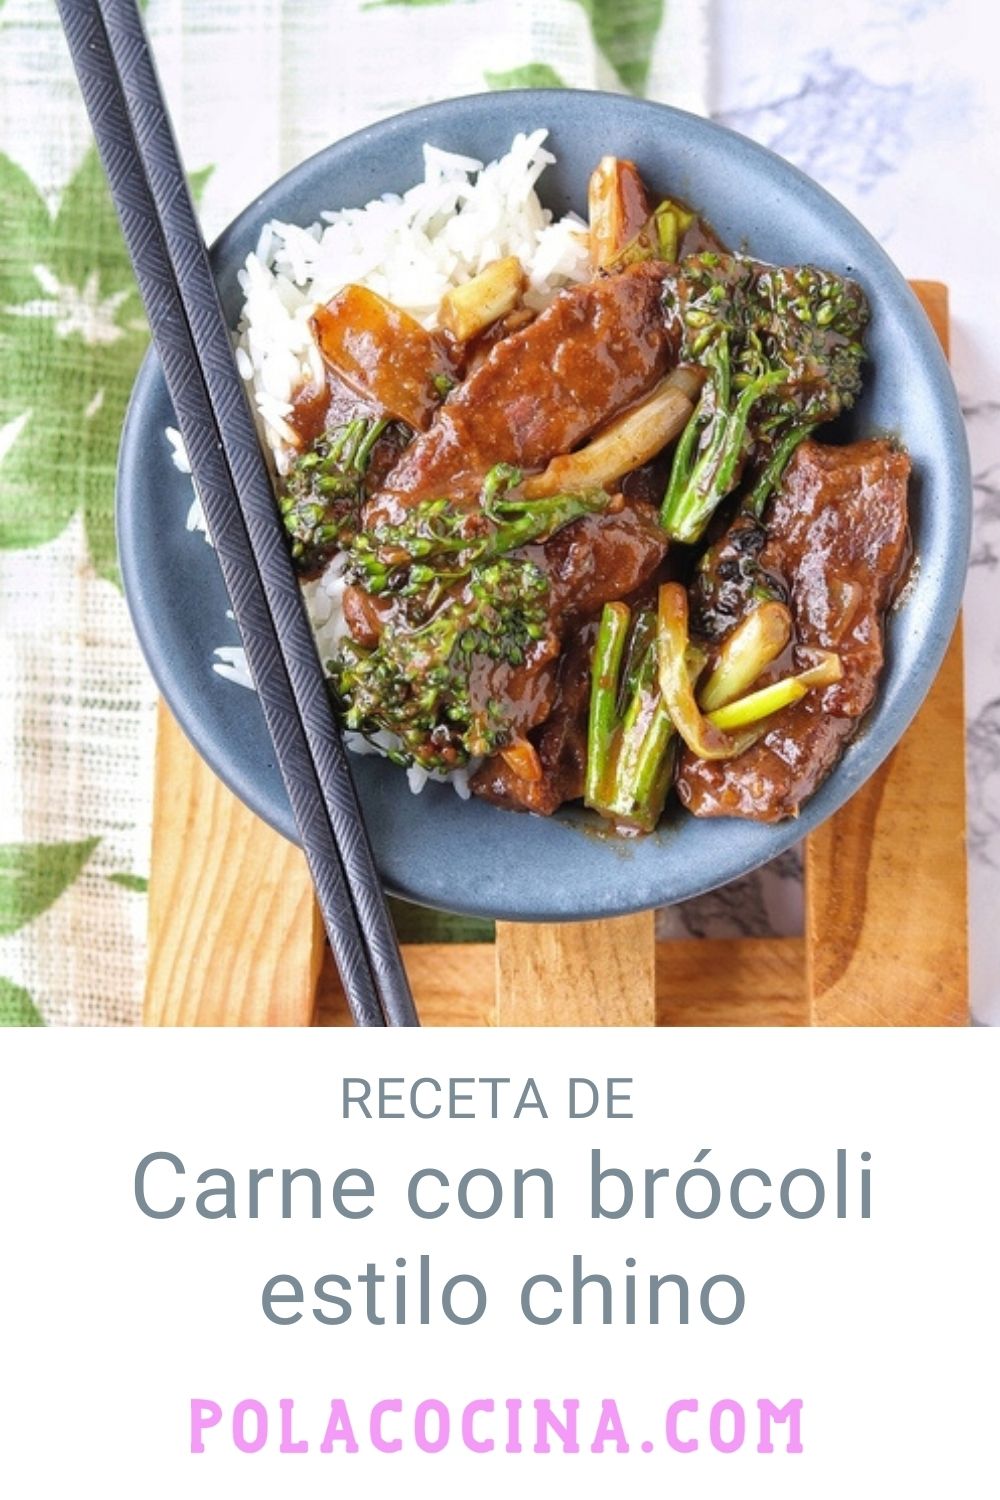 Carne con brócoli estilo chino